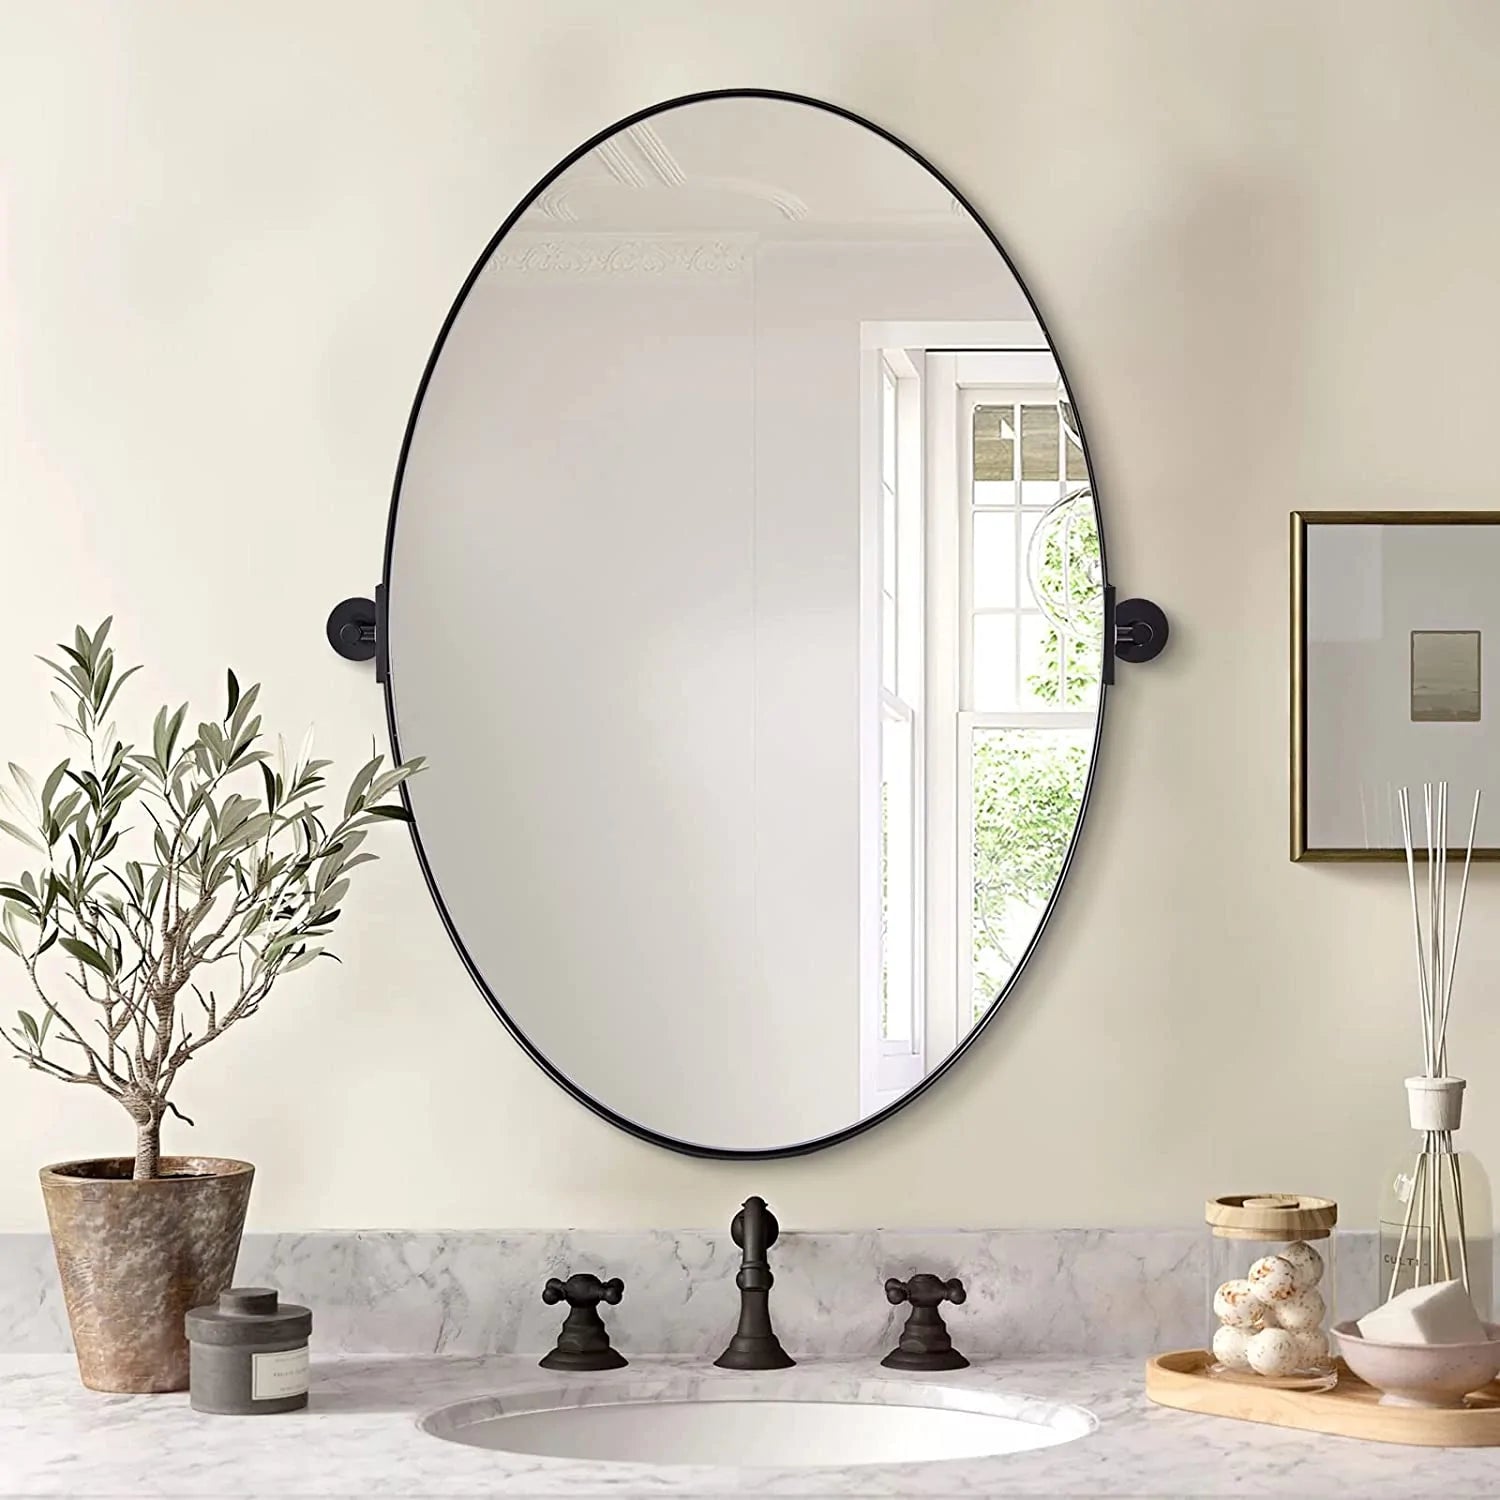 Modern Oval Pivot Mirror Adjustable Swivel Tilt Bathroom Oval Wall Mirror Stainless Steel Frame#color_matte black